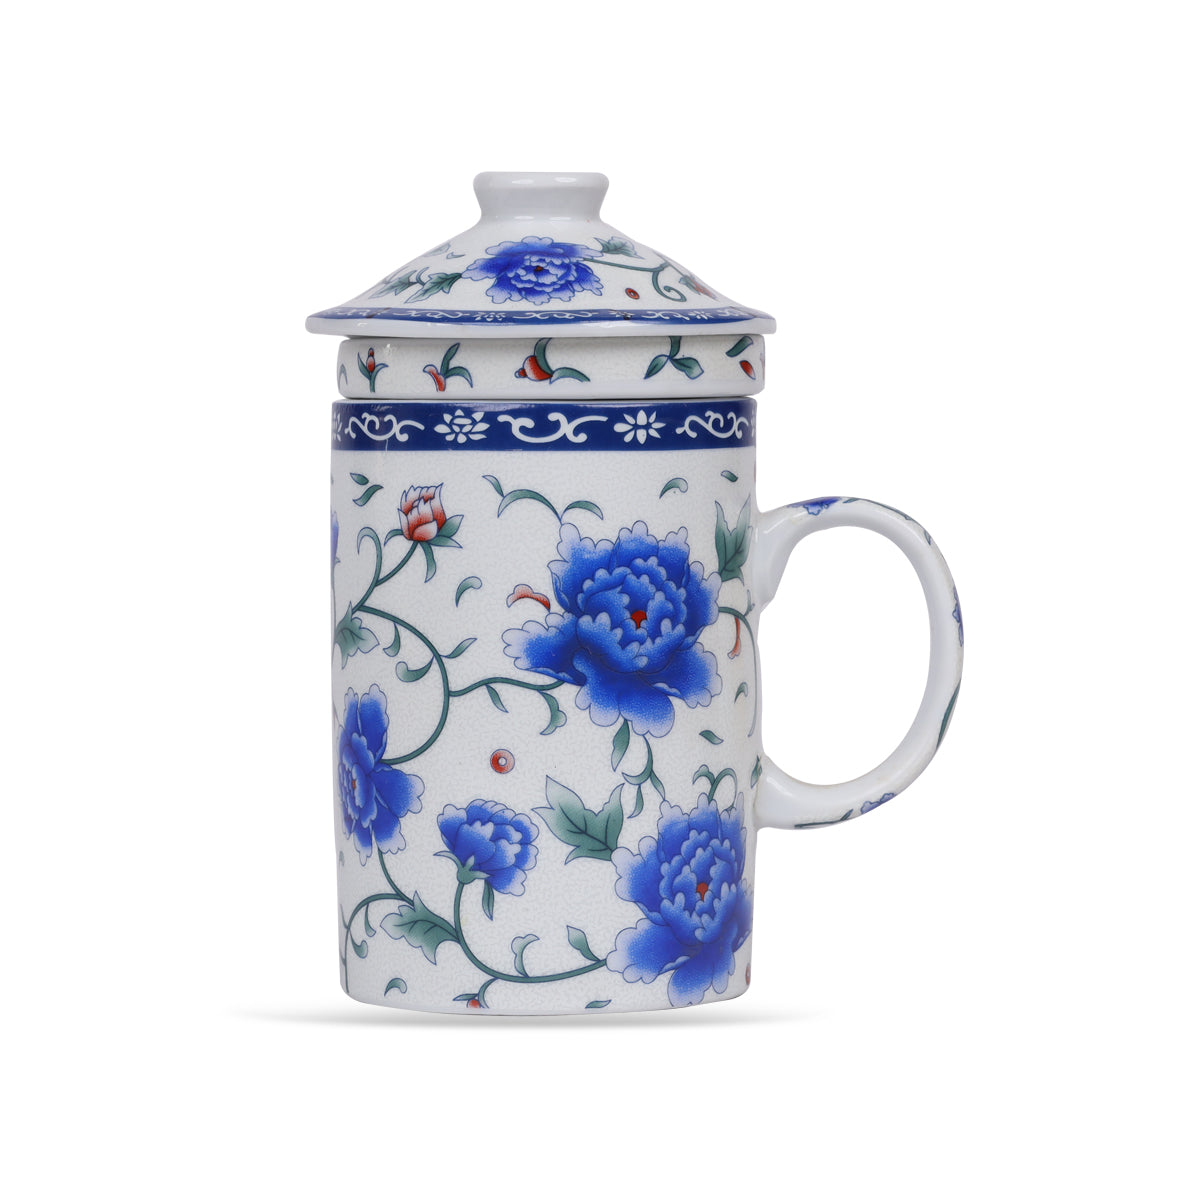 Ornate Green Tea Infuser Mug Blue Flower with Strainer and Lid